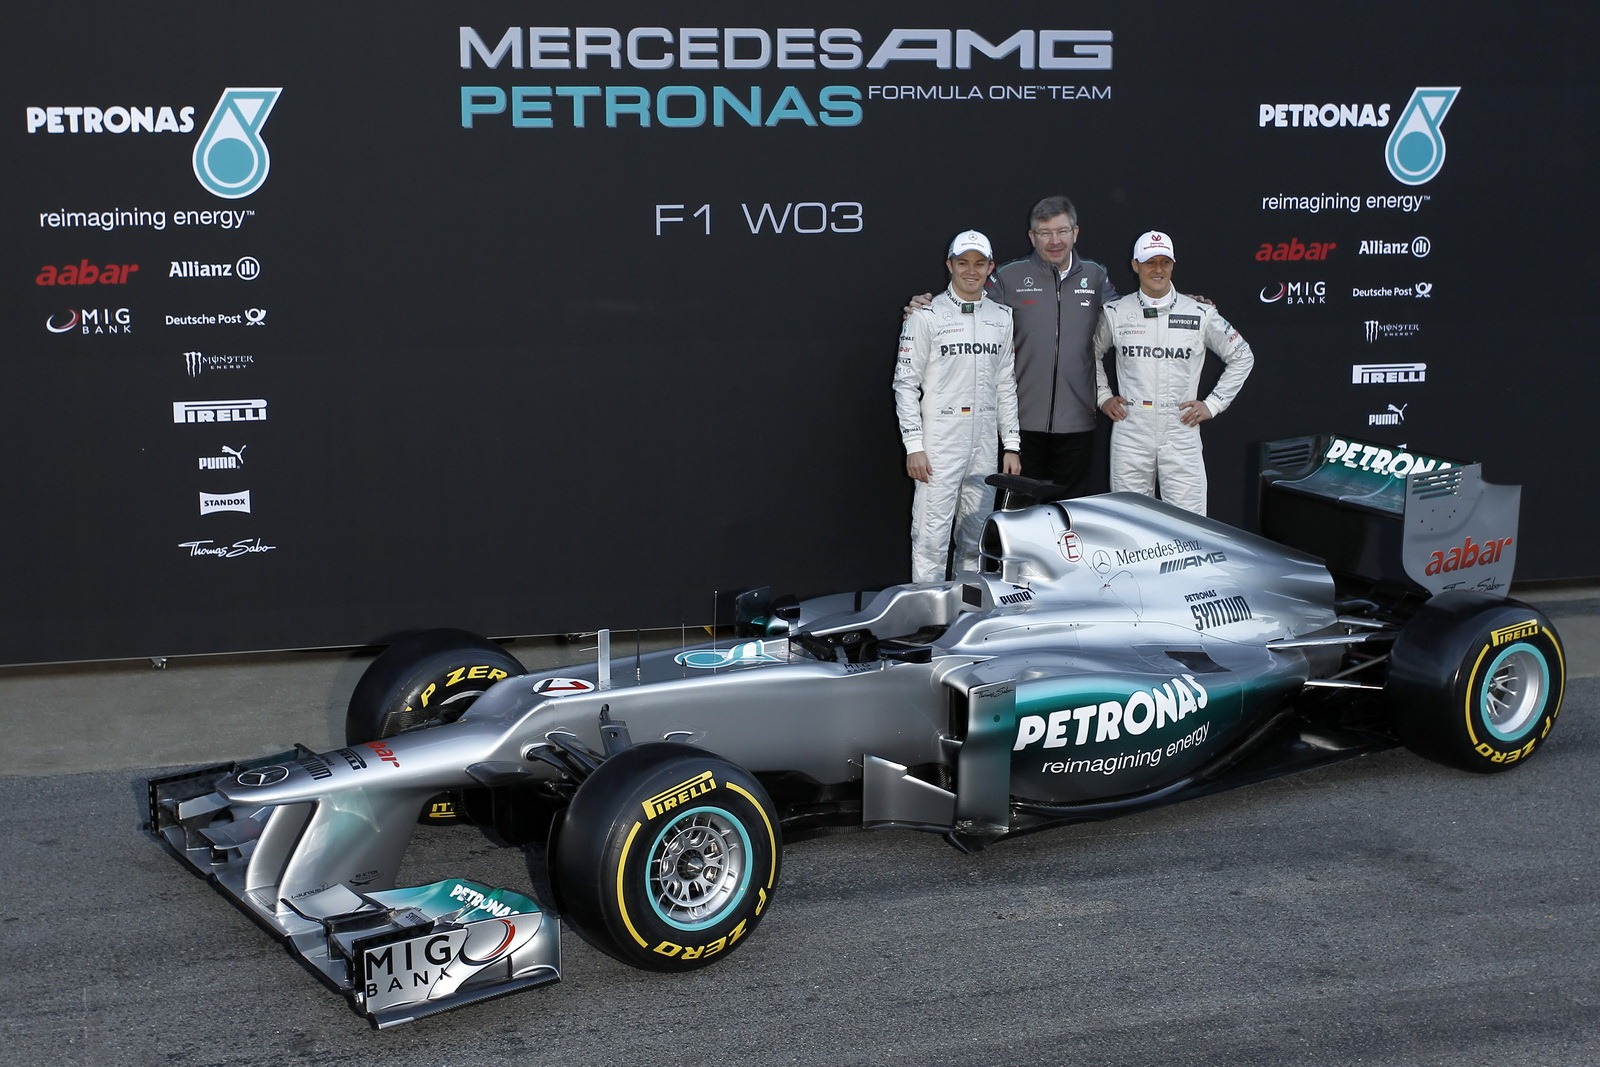 Mercedes amg petronas 2012 car #1